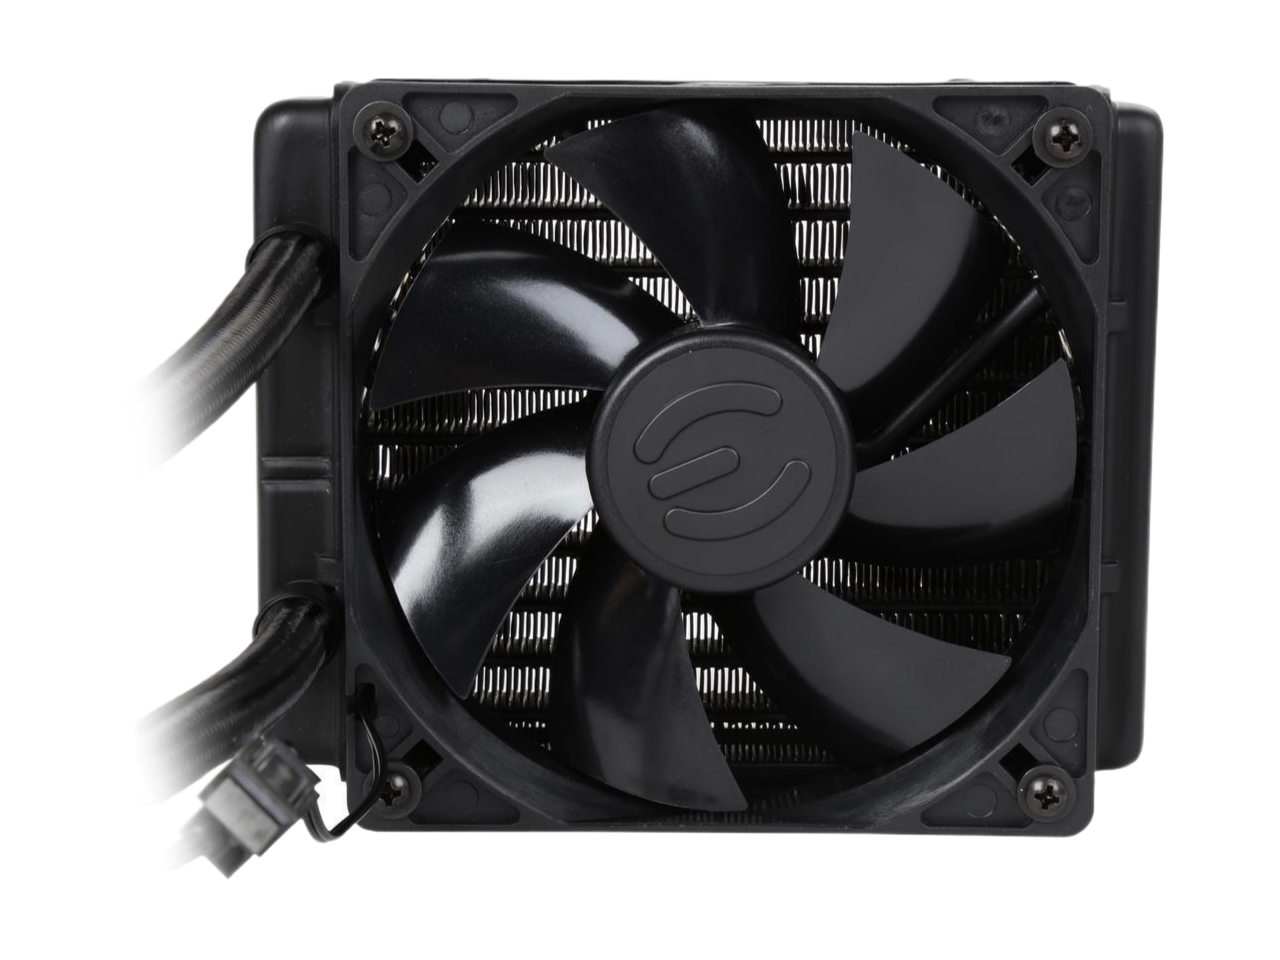 EVGA GeForce GTX 1080 Ti SC2 HYBRID GAMING 11GB GDDR5X HYBRID & LED iCX Technology - 9 Thermal Sensors Video Graphics Card 11G-P4-6598-KR